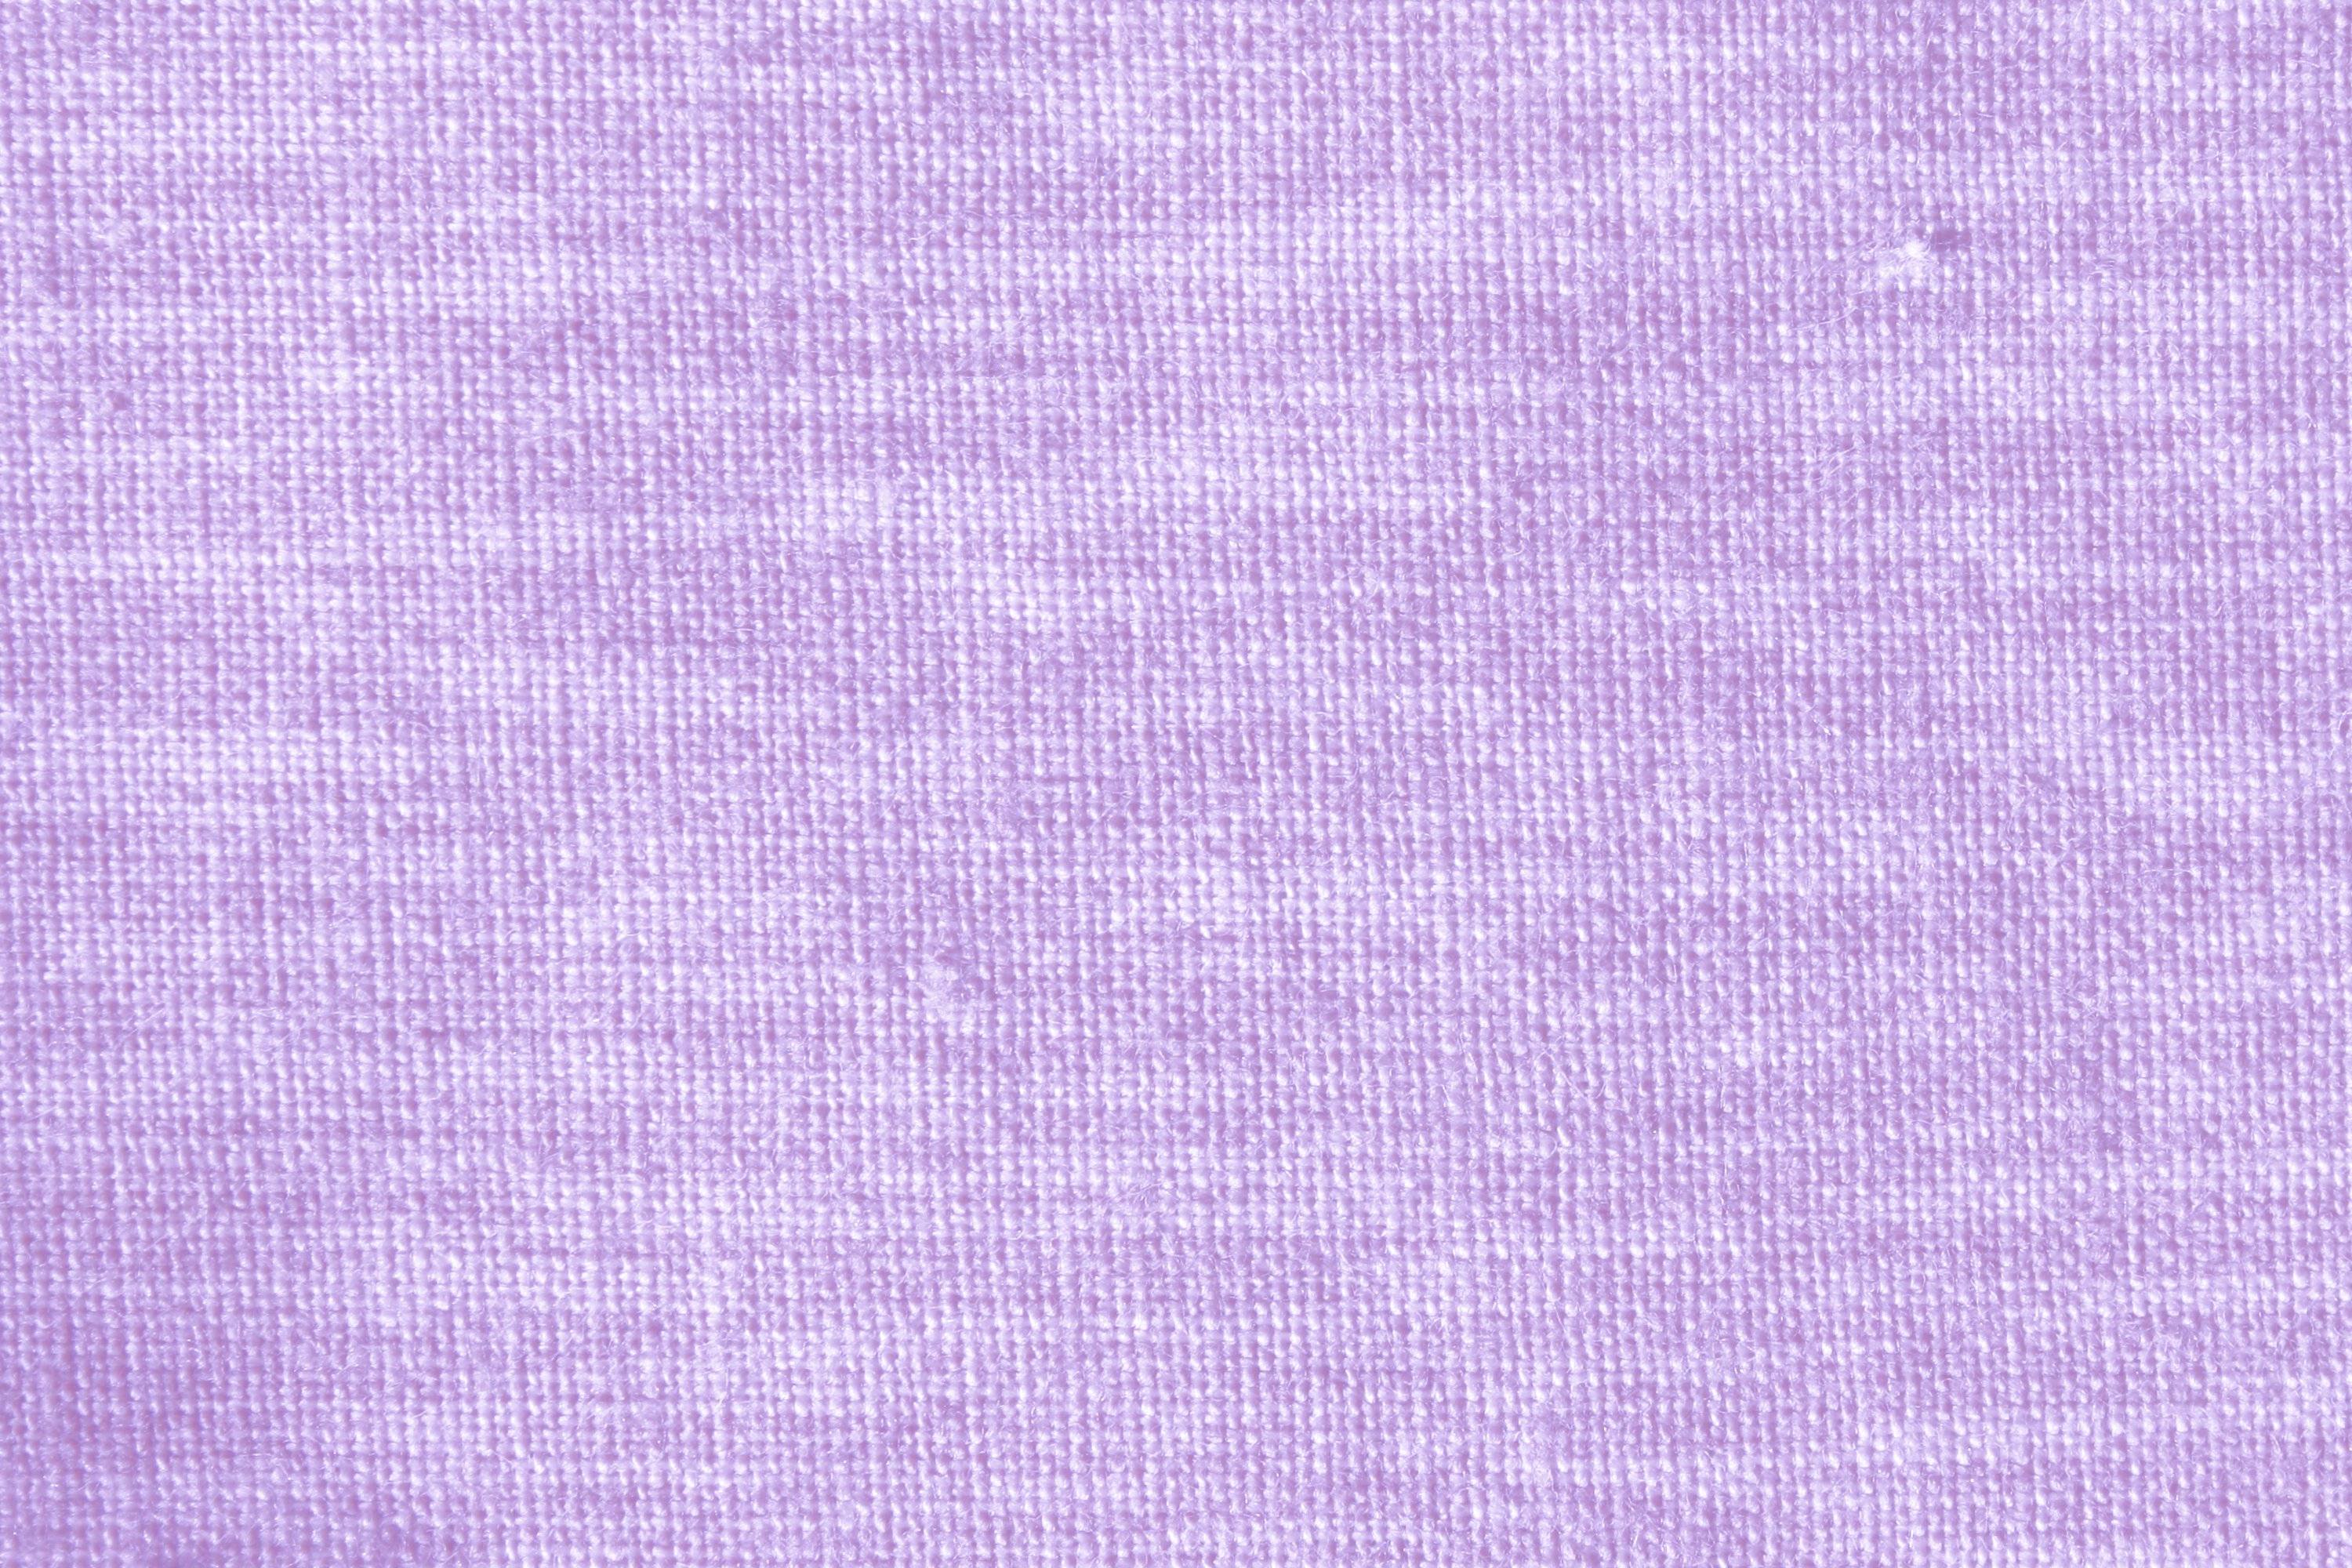 pastel purple tumblr background